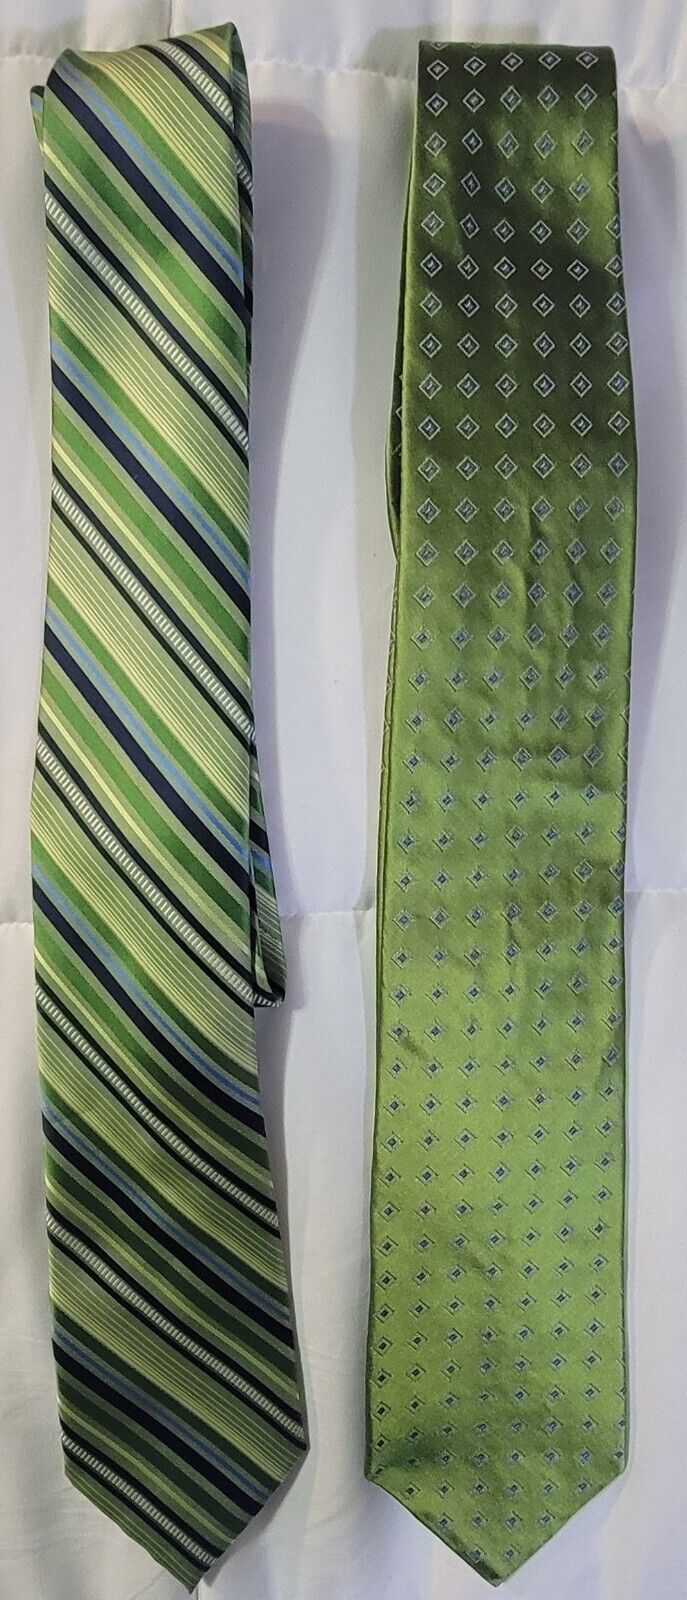 Lot of 2 Men's Silk Neckties Ties HAGGER AND DKNY green 60in